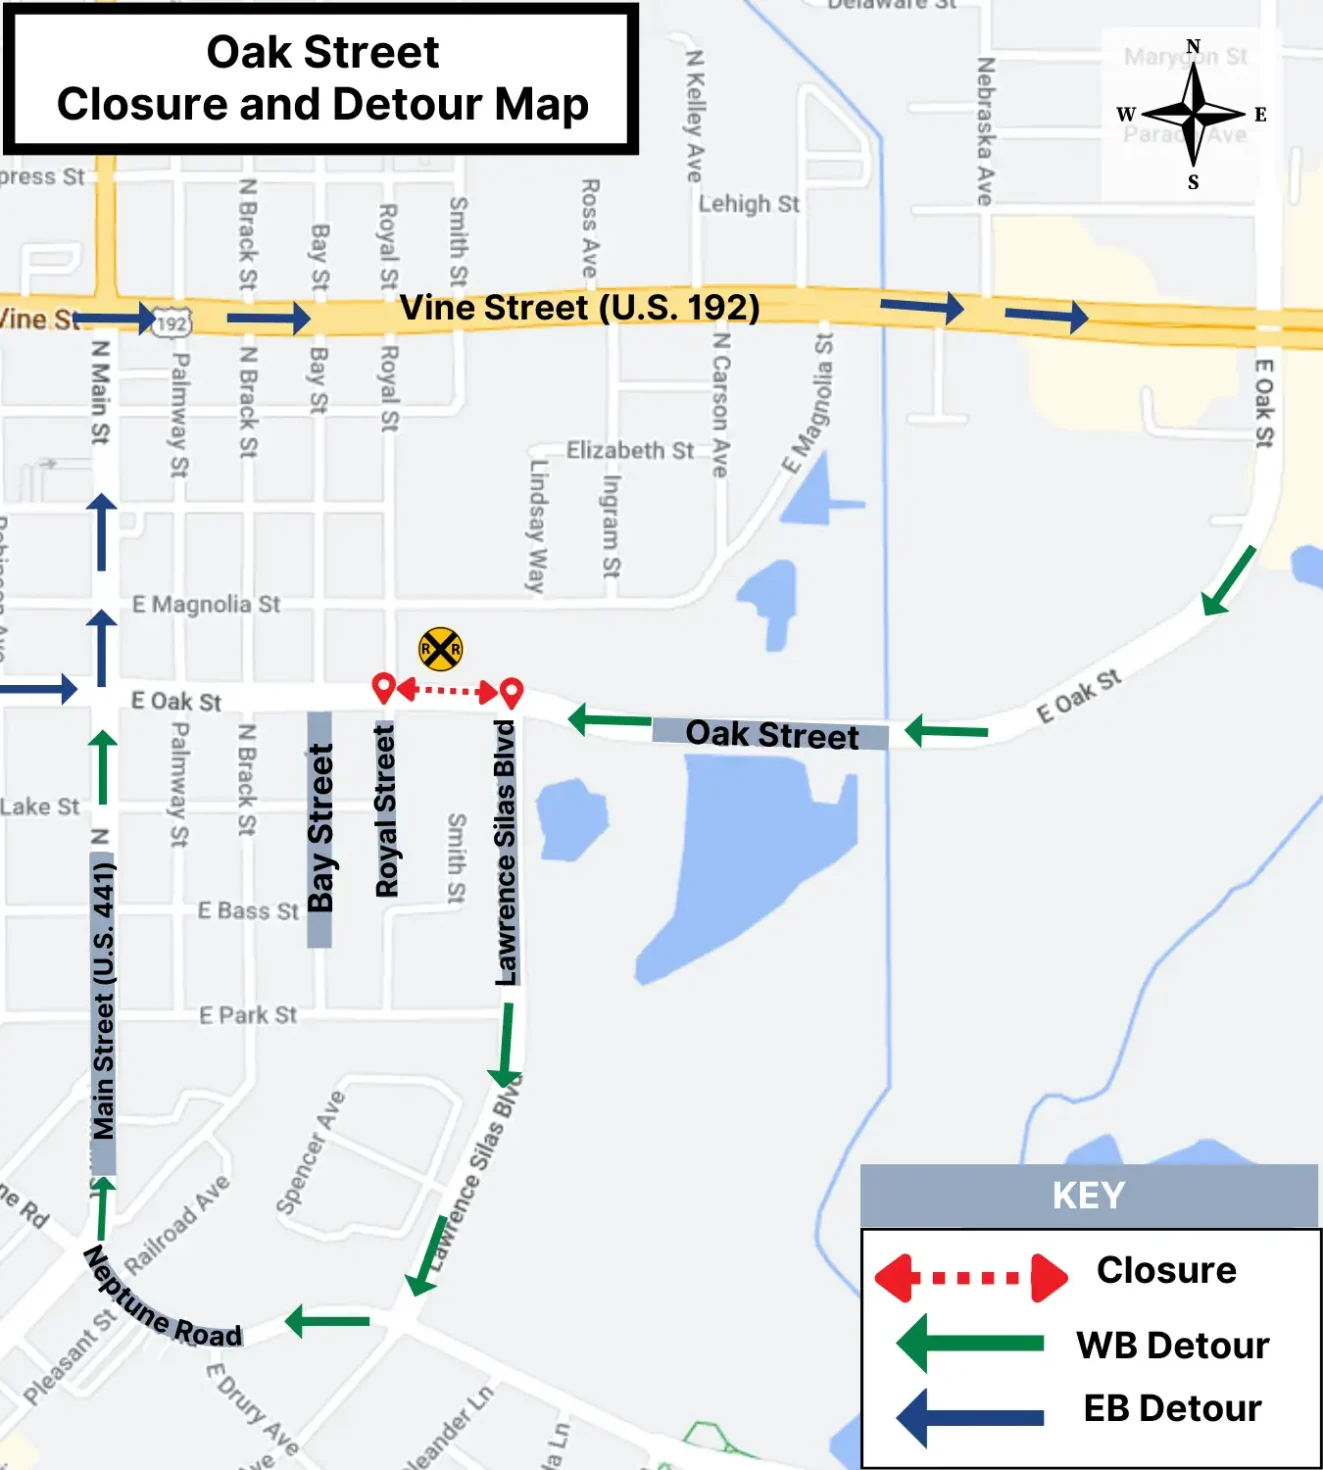 Oak Street Closure and Detour Map